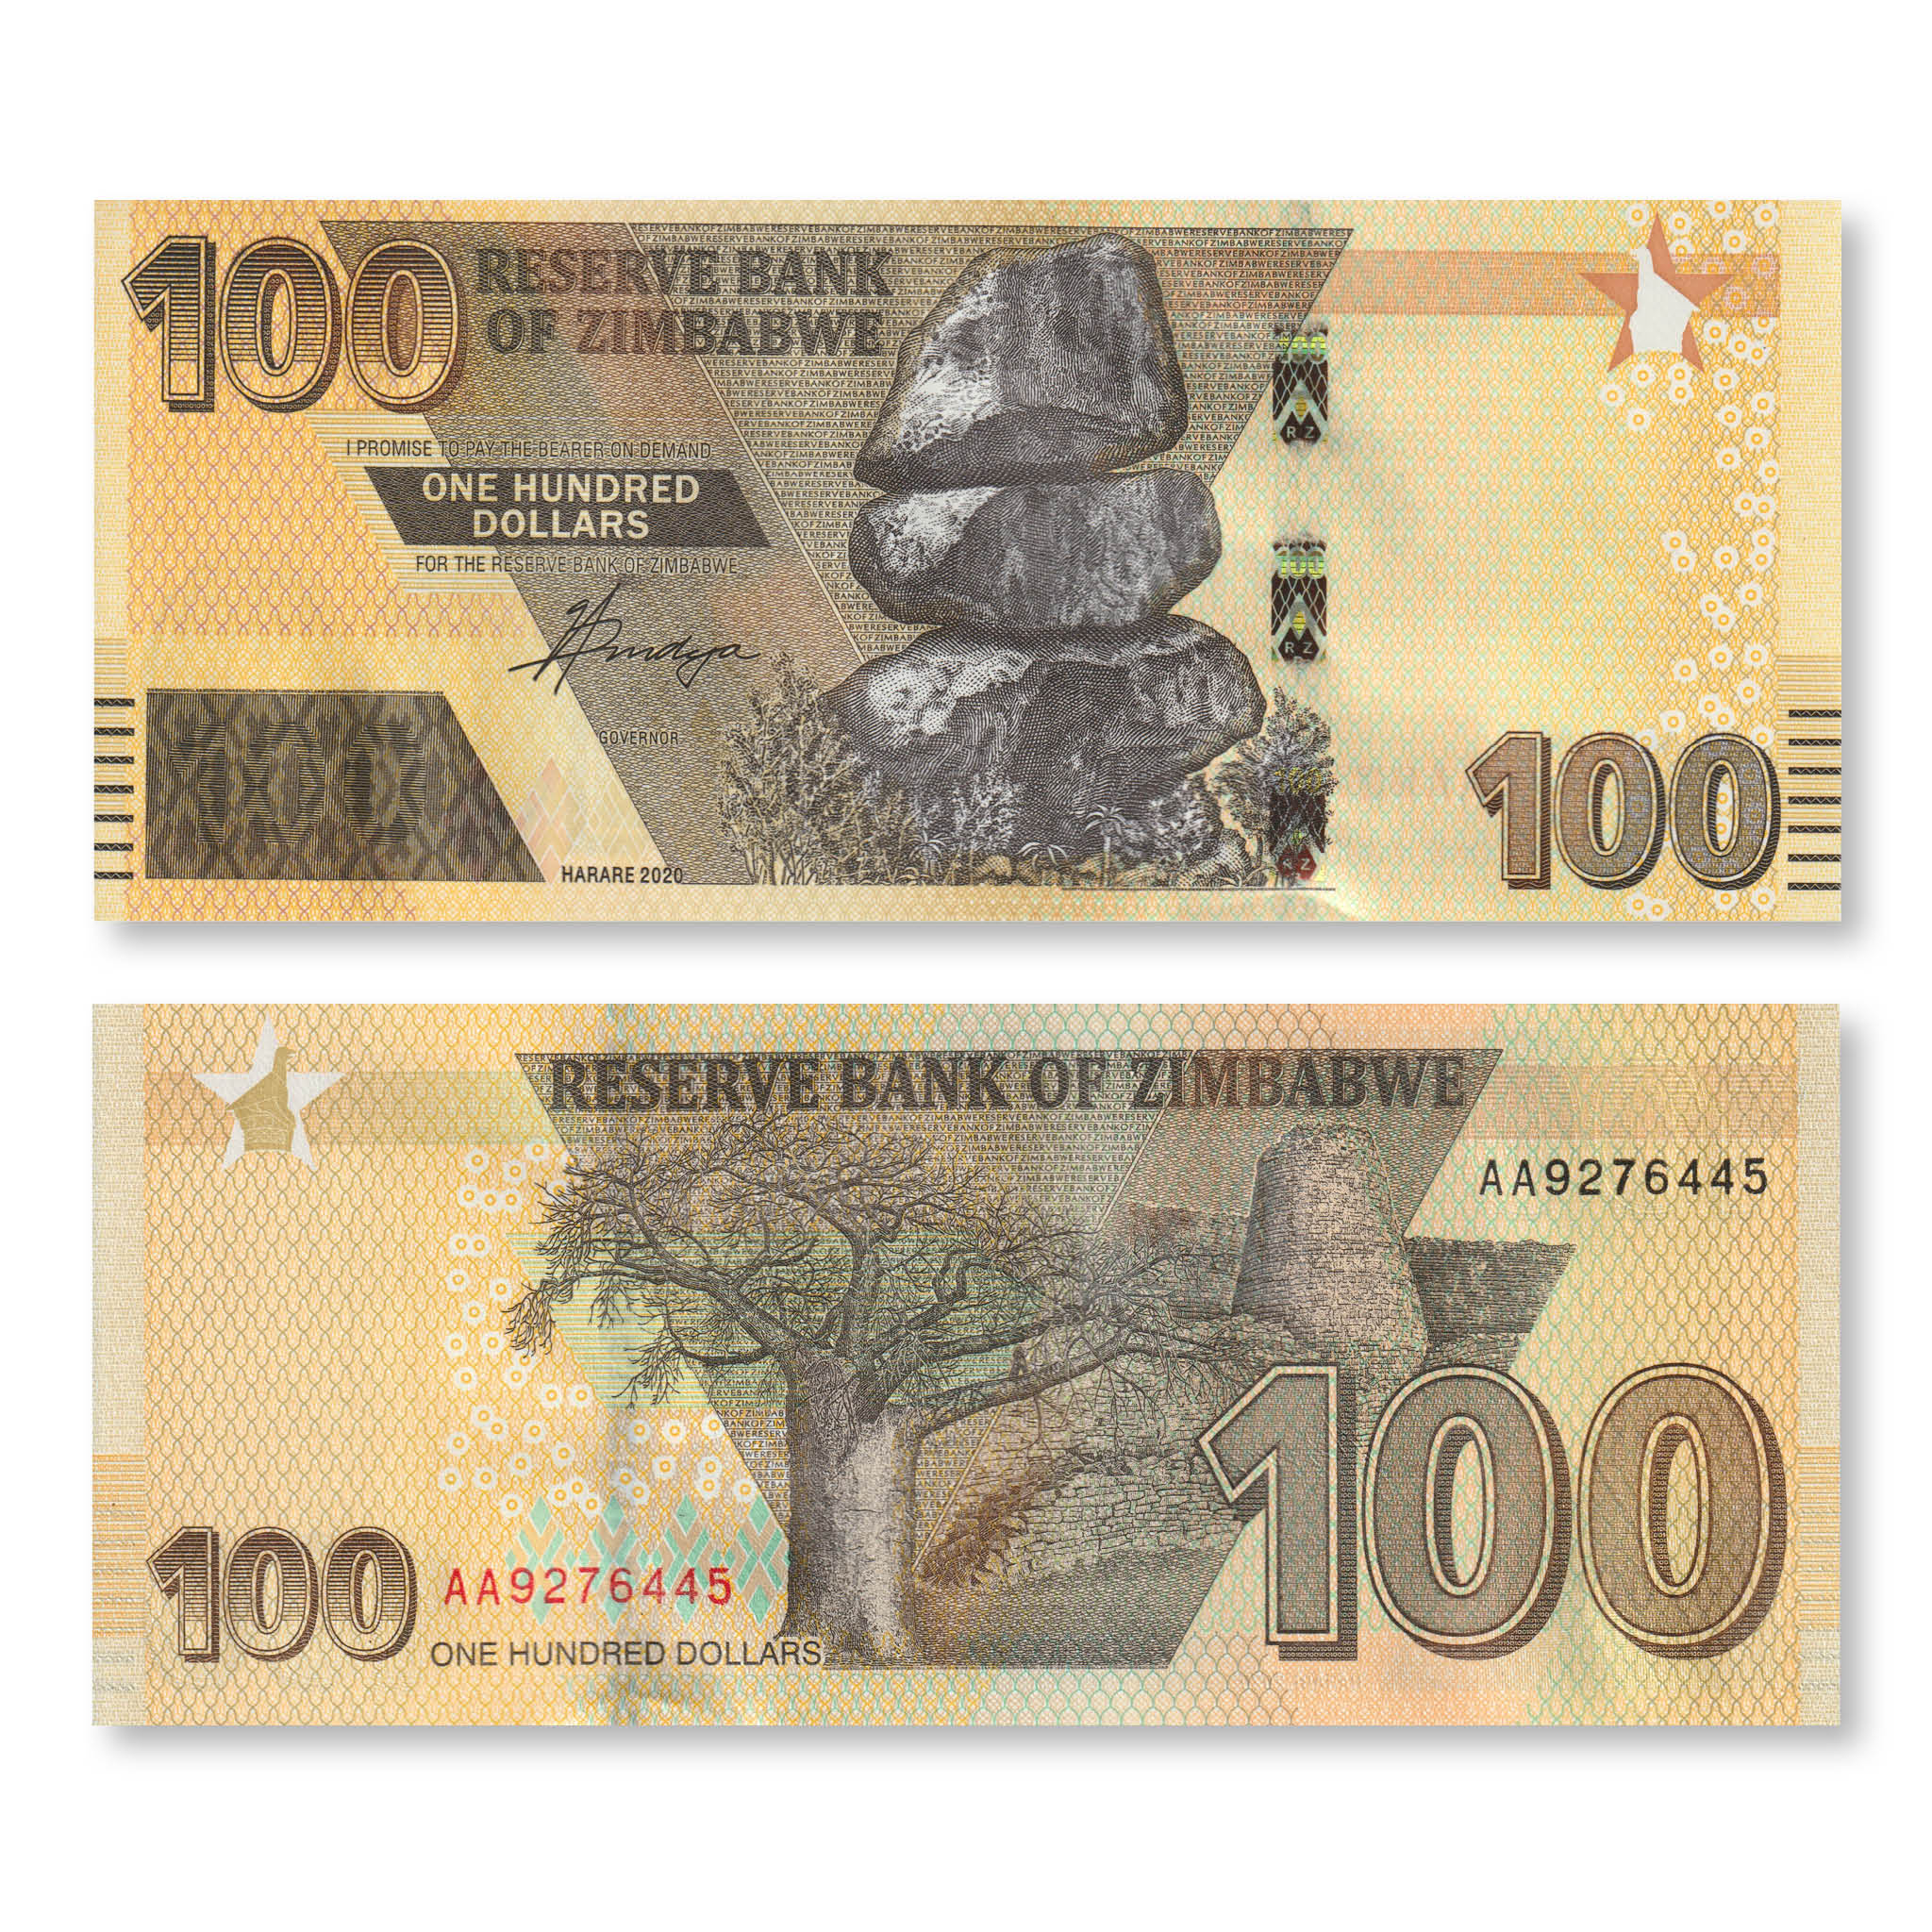 Zimbabwe 100 Dollars, 2020, B197a, UNC - Robert's World Money - World Banknotes